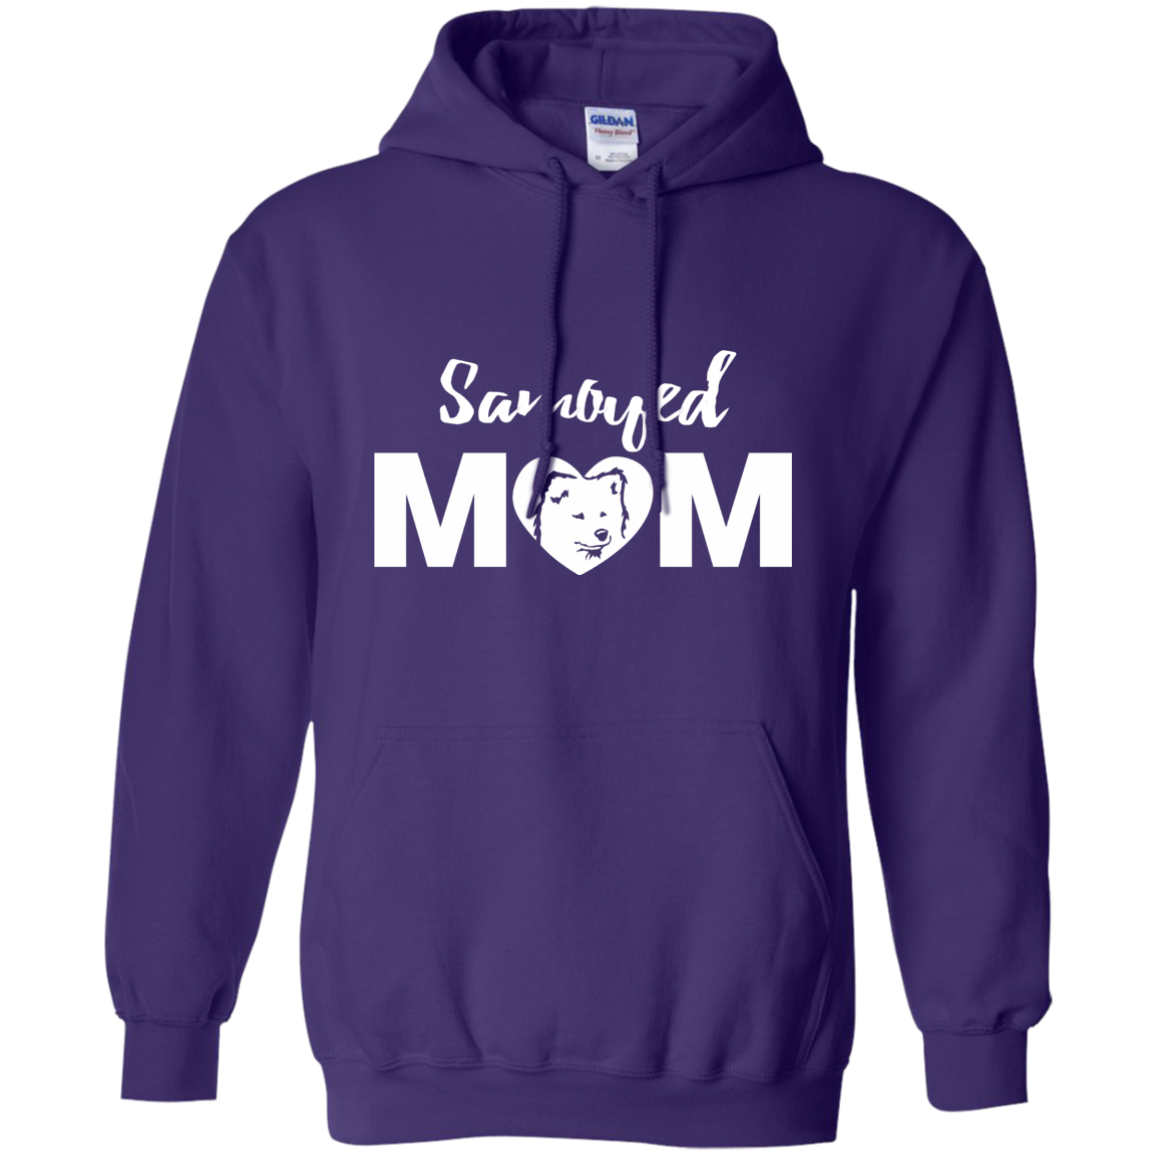 Samoyed Mom - Dog - Pullover Hoodie